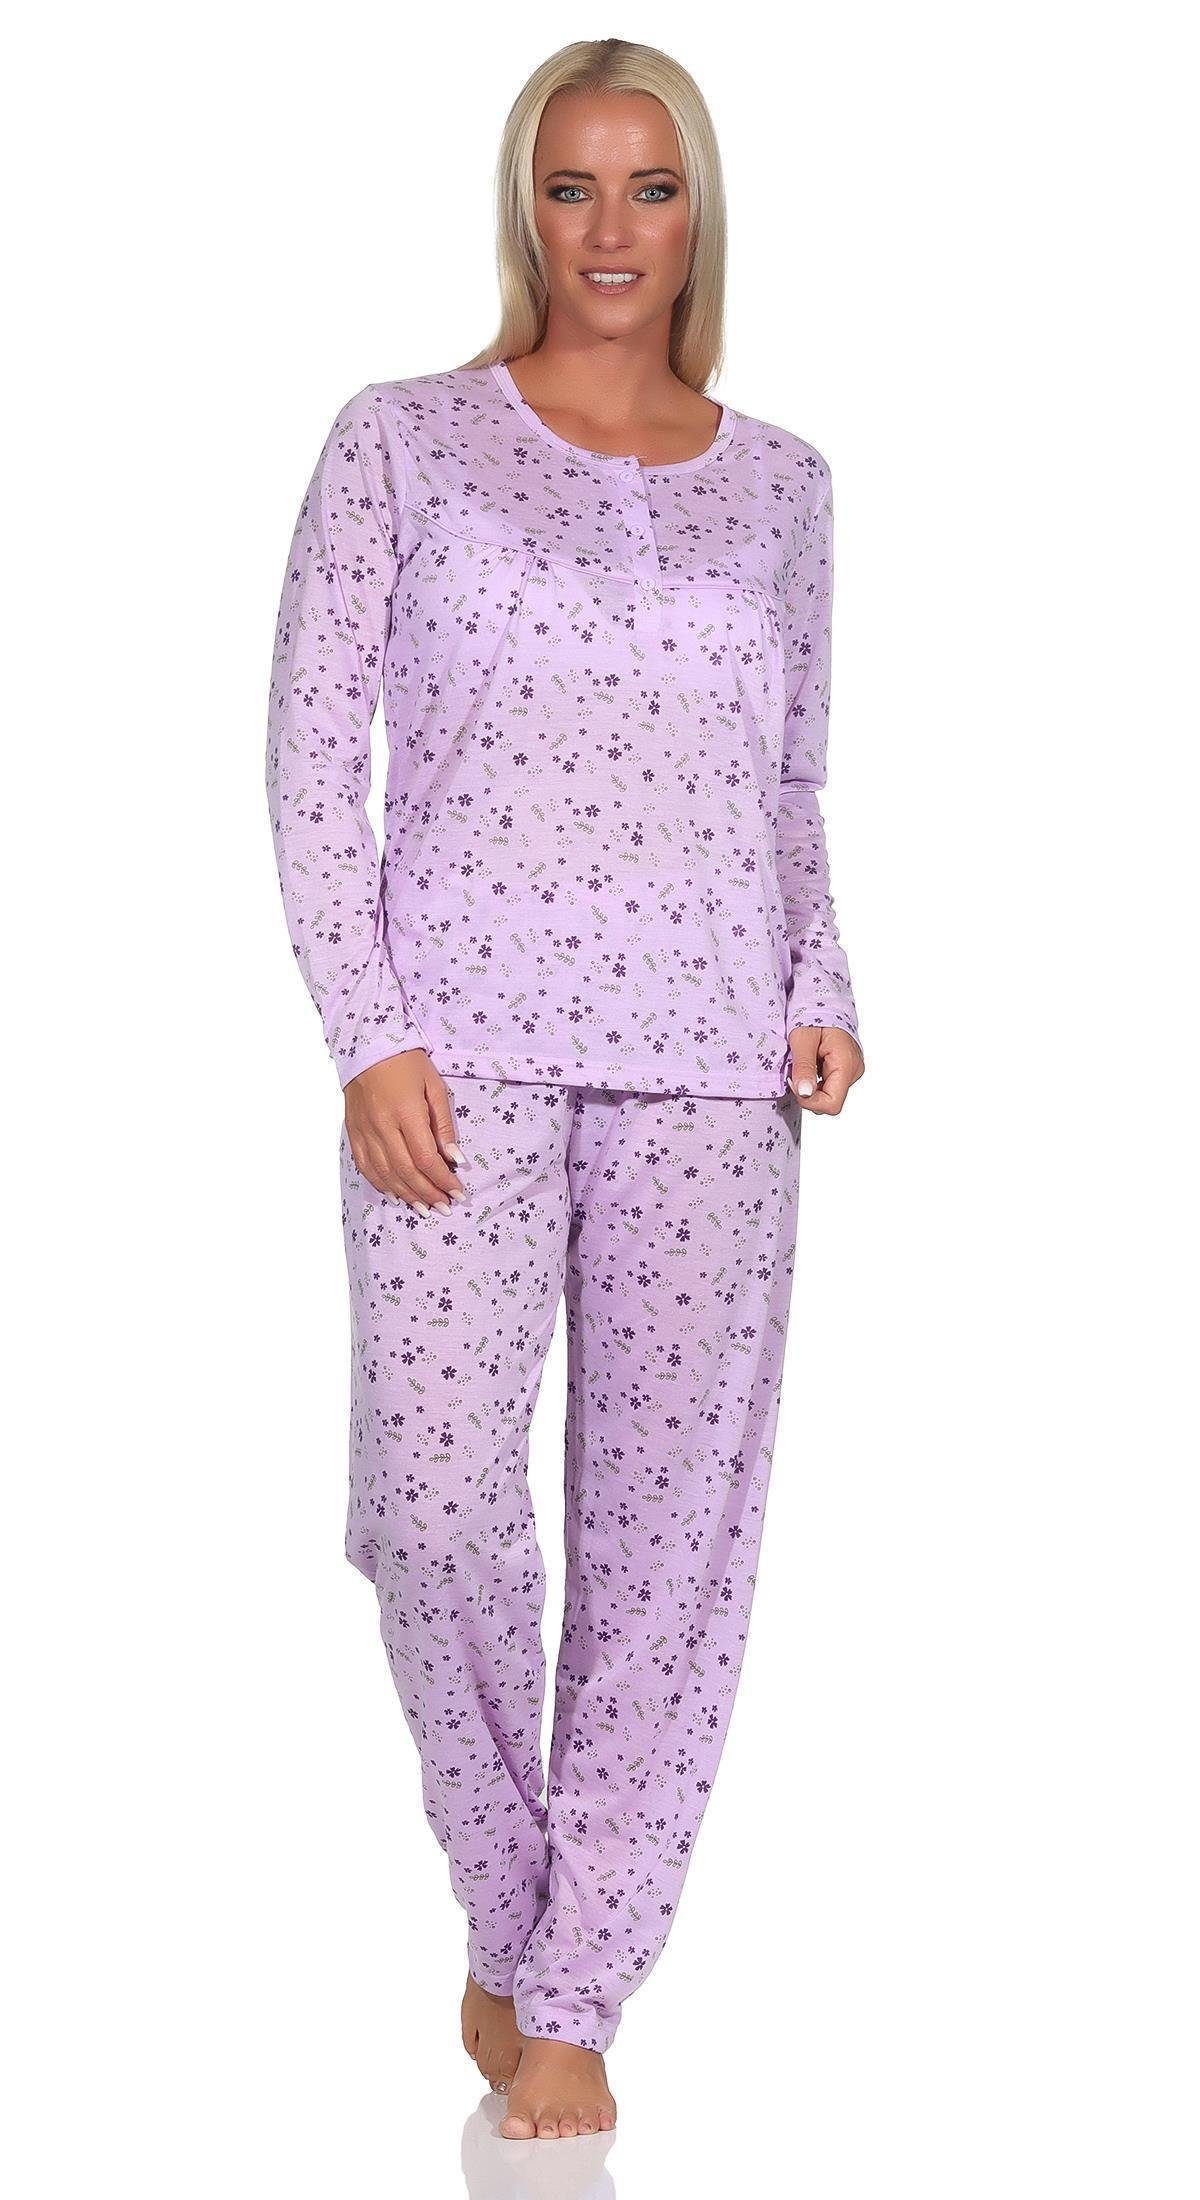 L EloModa 2XL XL Damen Pyjama Pyjama langarm (2 Flieder Schlafanzug; tlg) zweiteiliger M Gr.